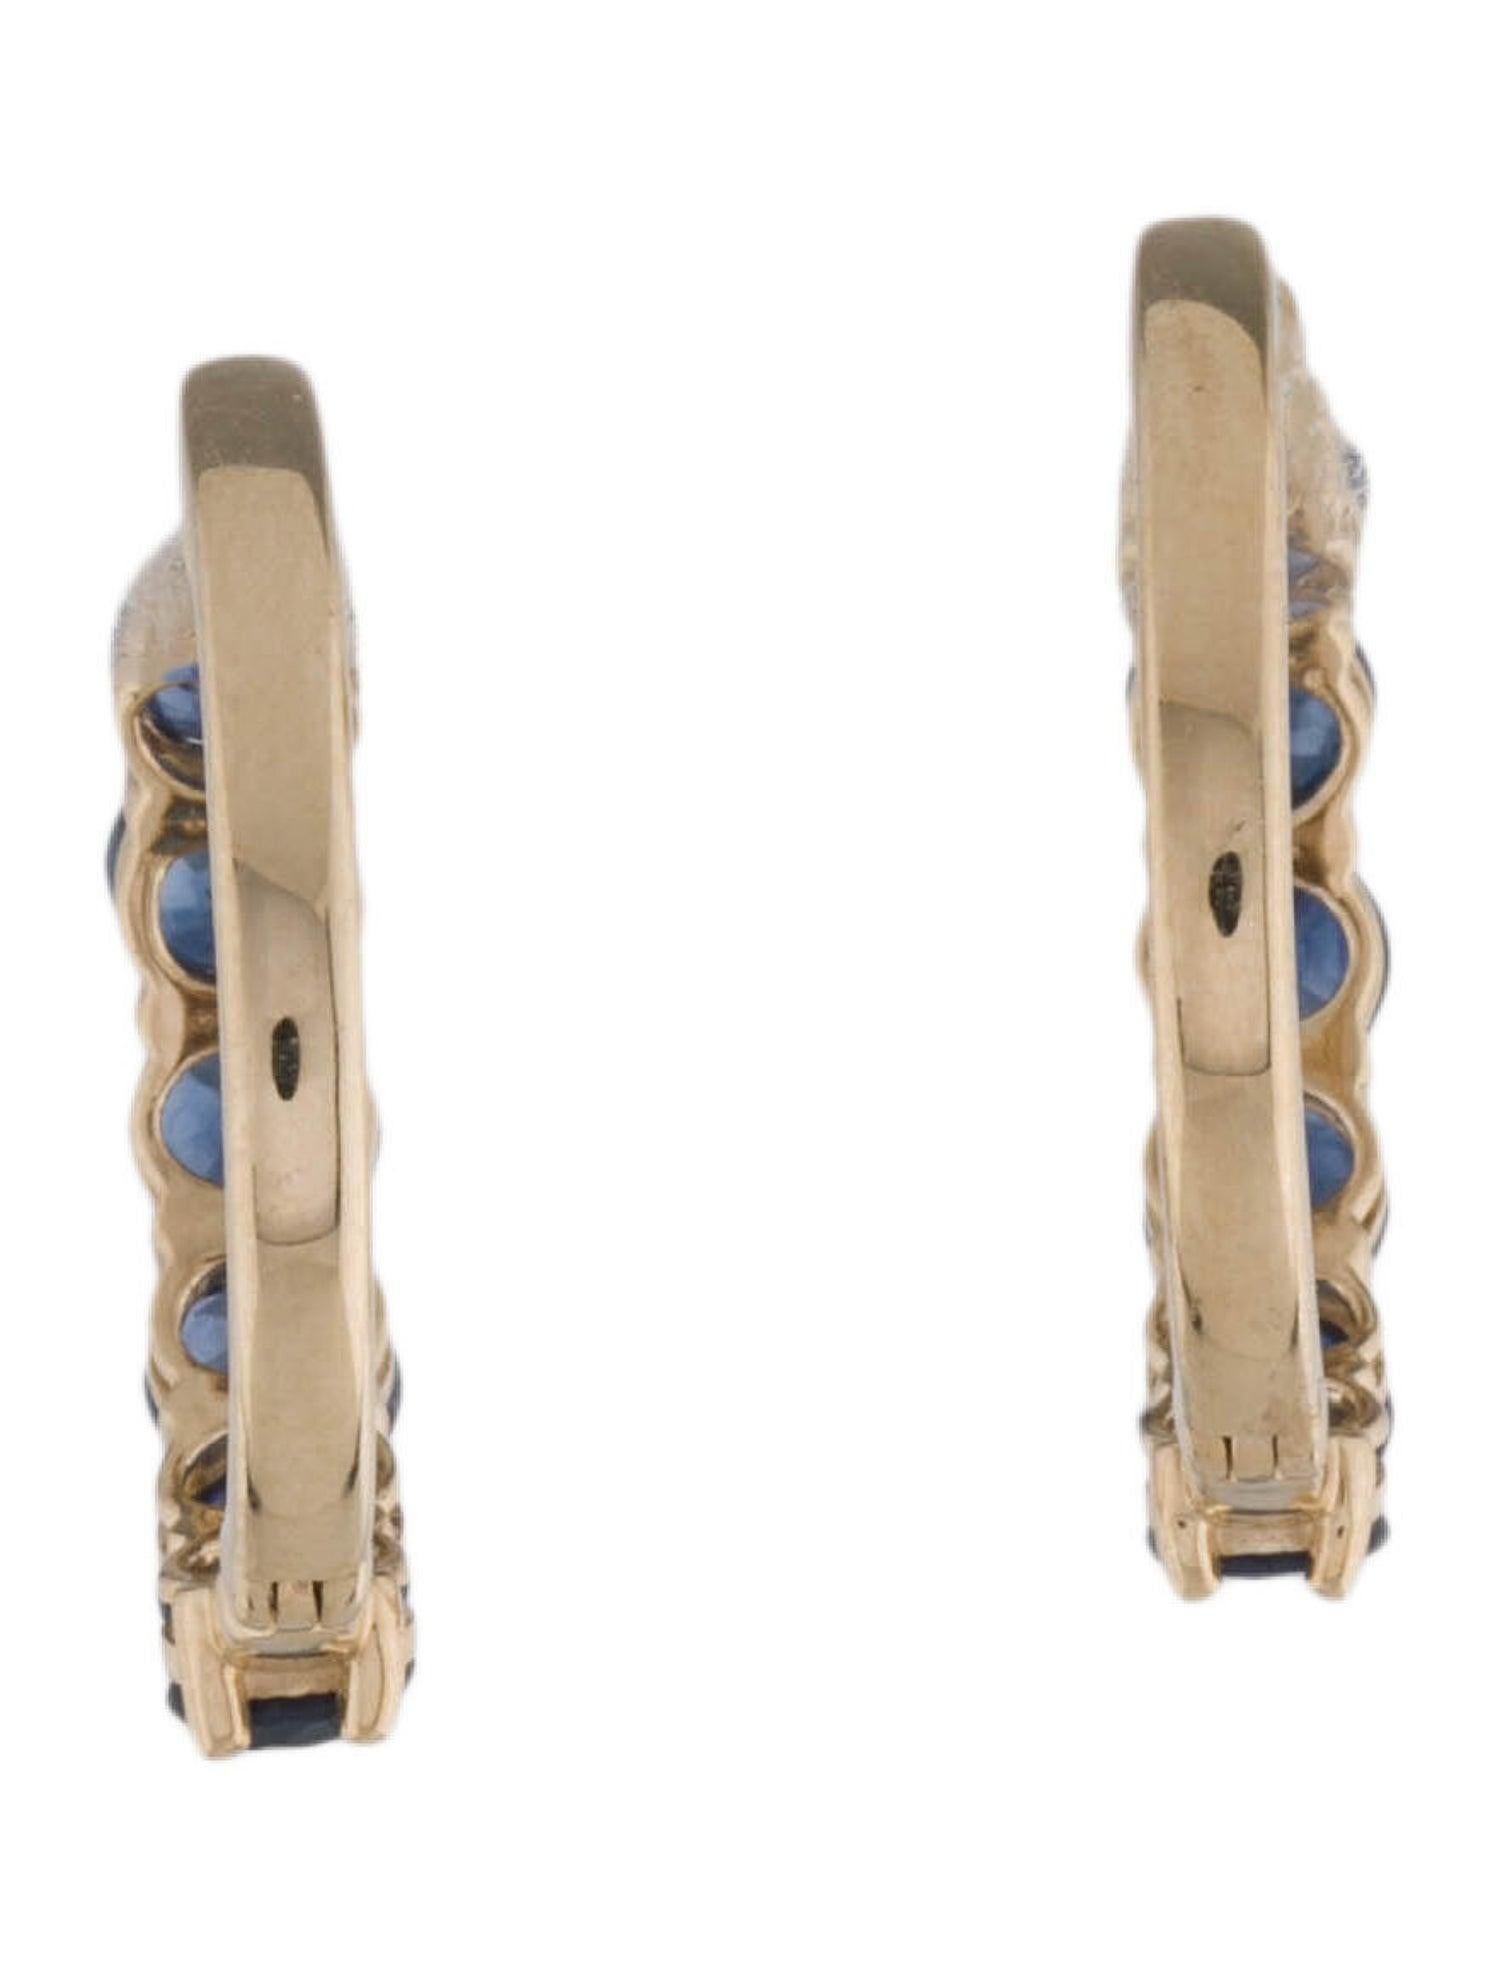 Brilliant Cut 14K Sapphire Hoop Earrings - 3.31ctw, Elegant Gemstone Jewelry, Timeless Style For Sale